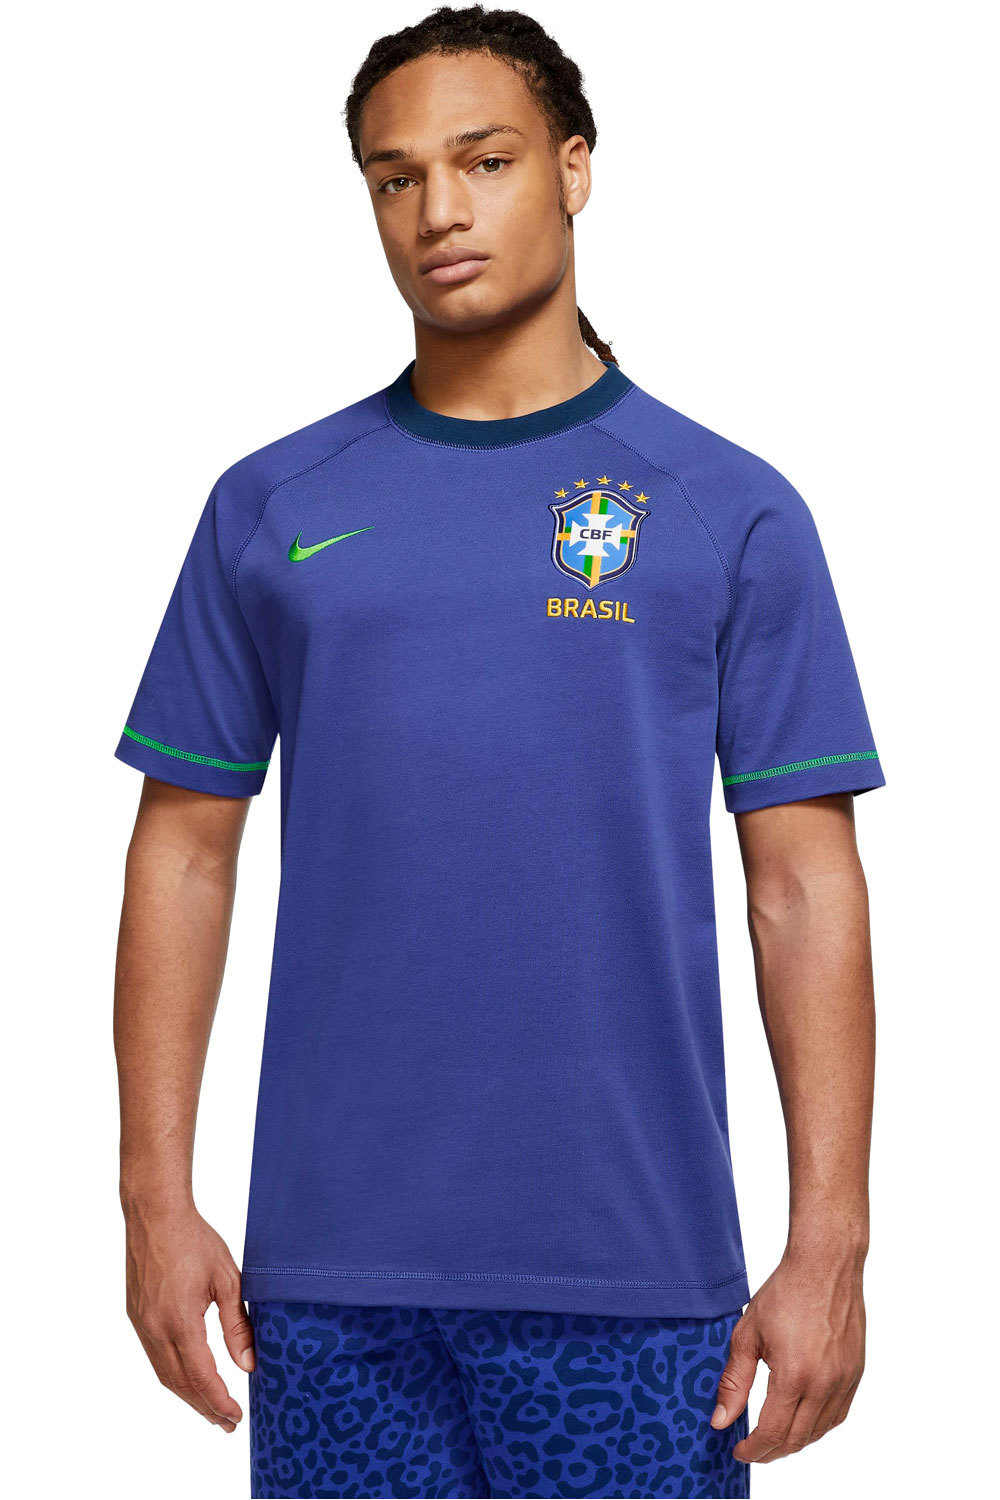 Nike camiseta de fútbol oficiales BRASIL 22 TRAVEL TOP vista frontal